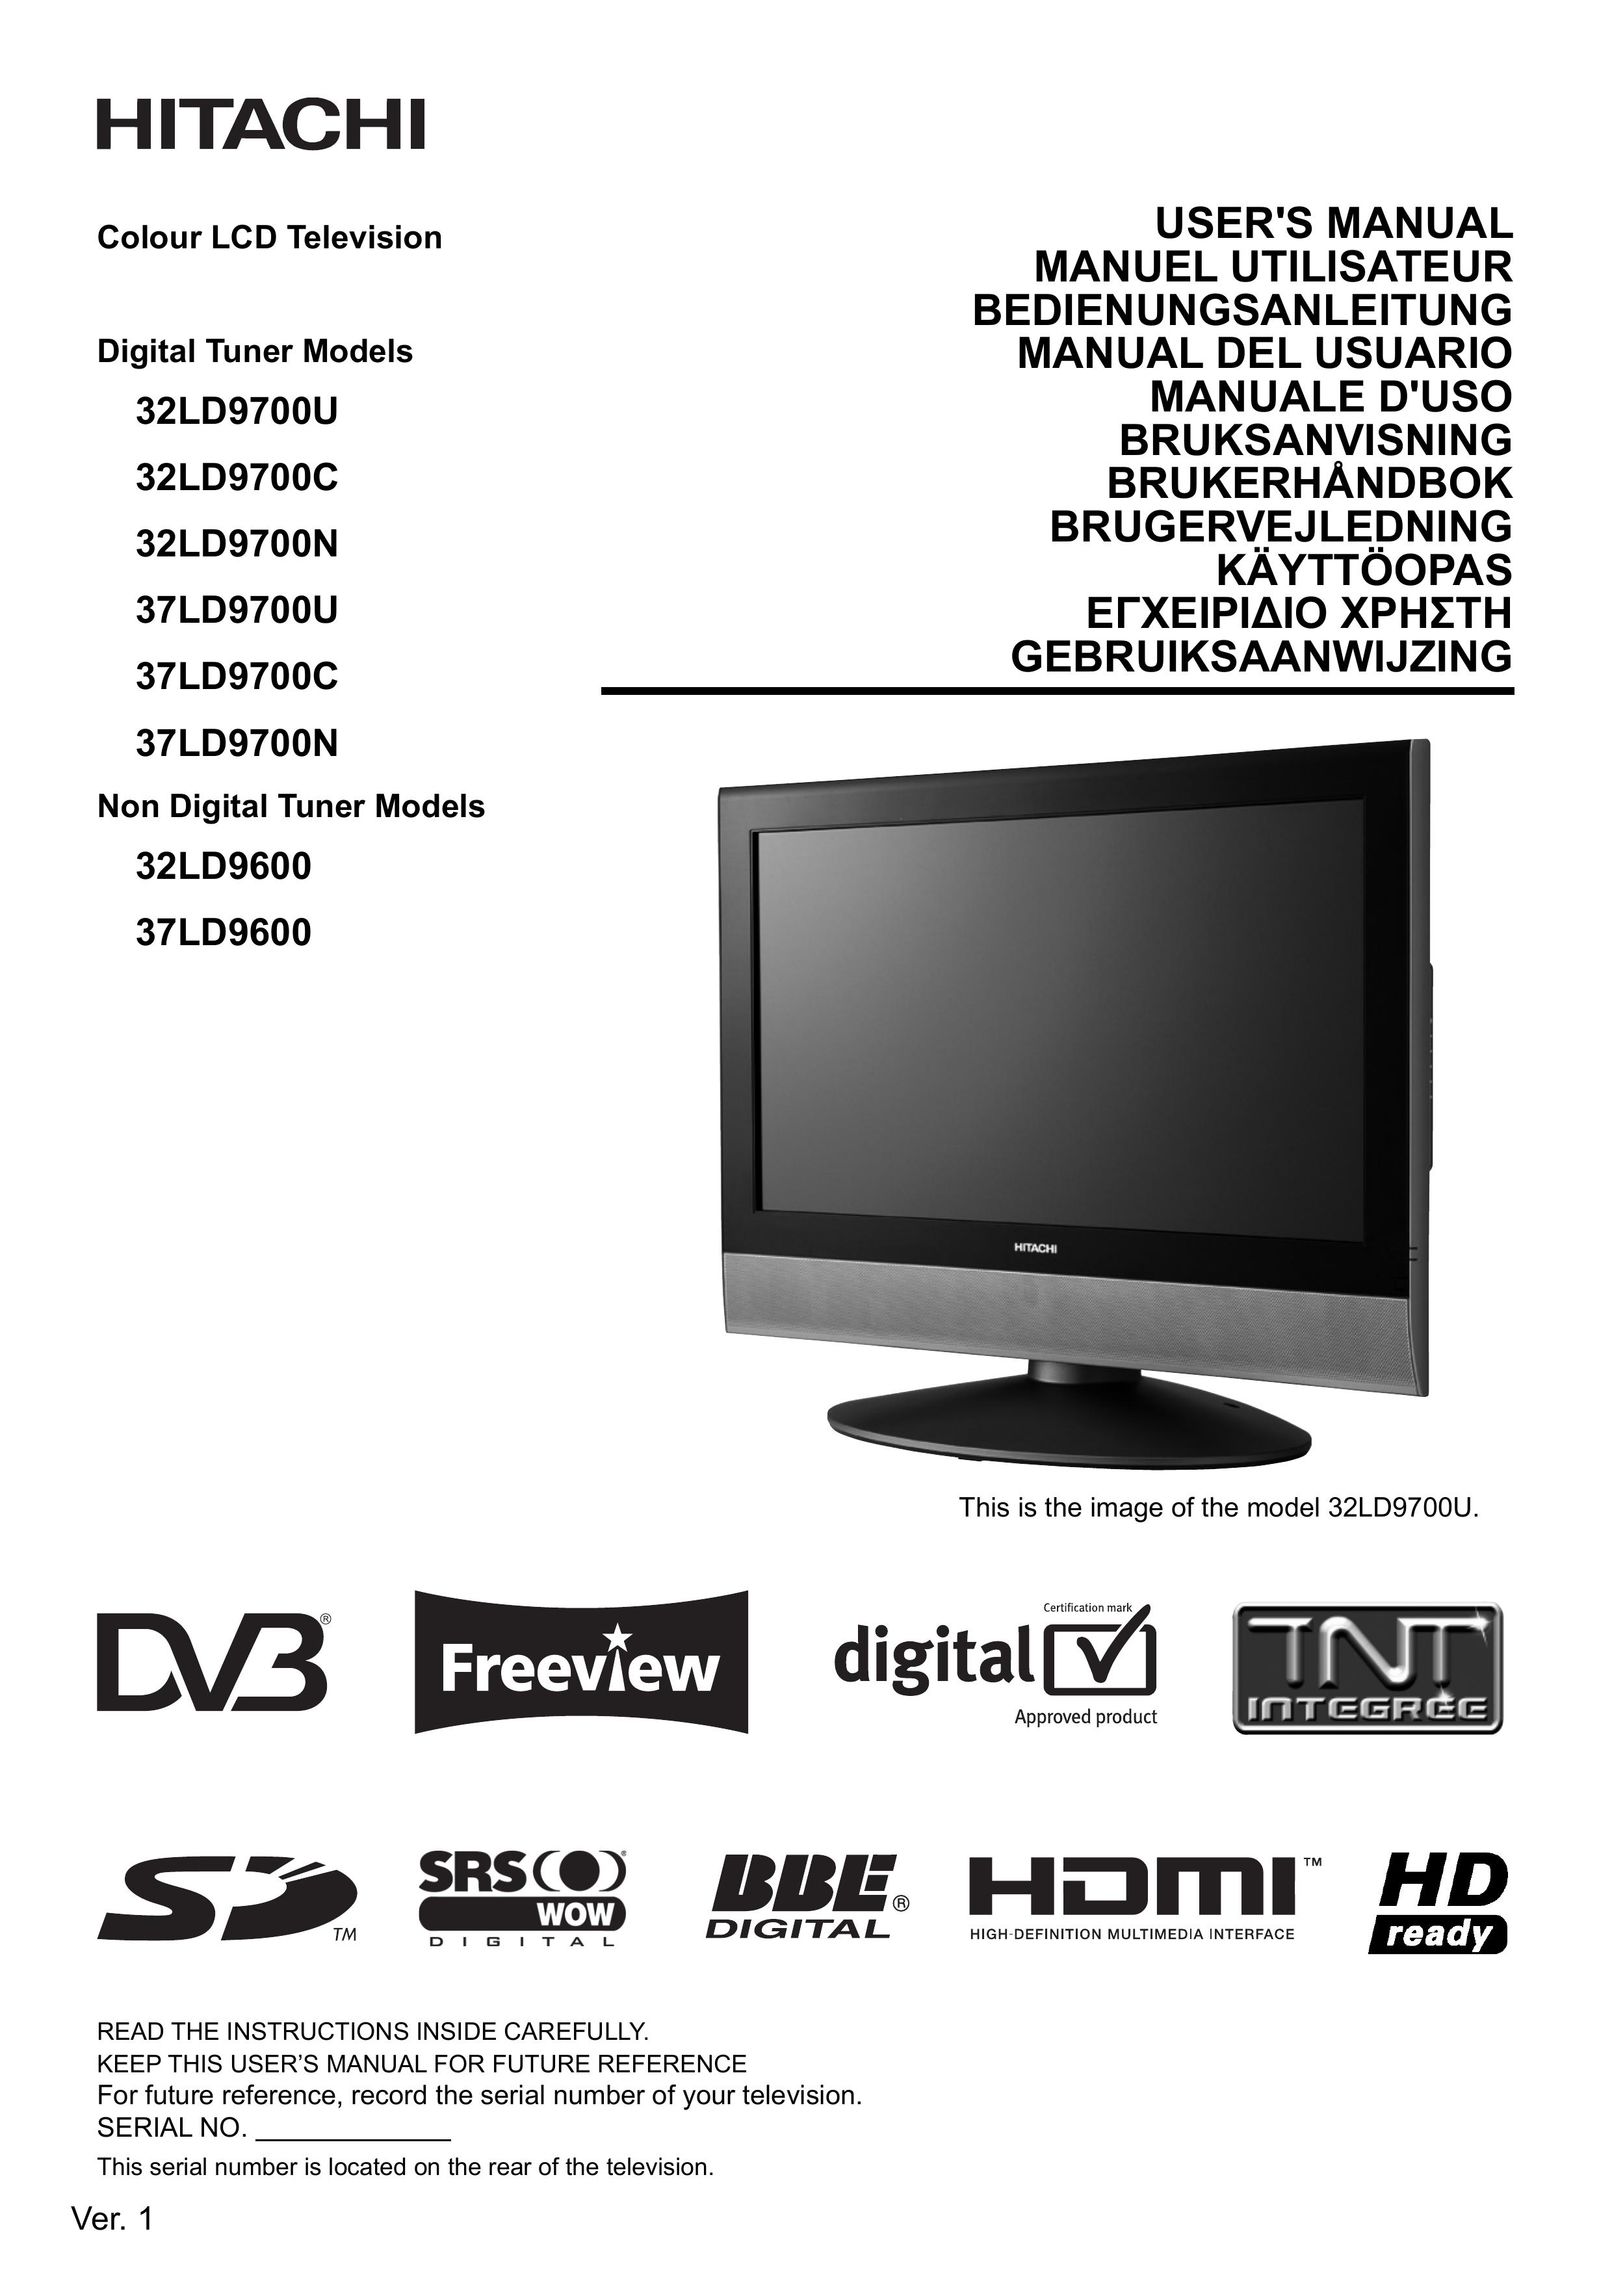 Hitachi 32LD9700C Flat Panel Television User Manual